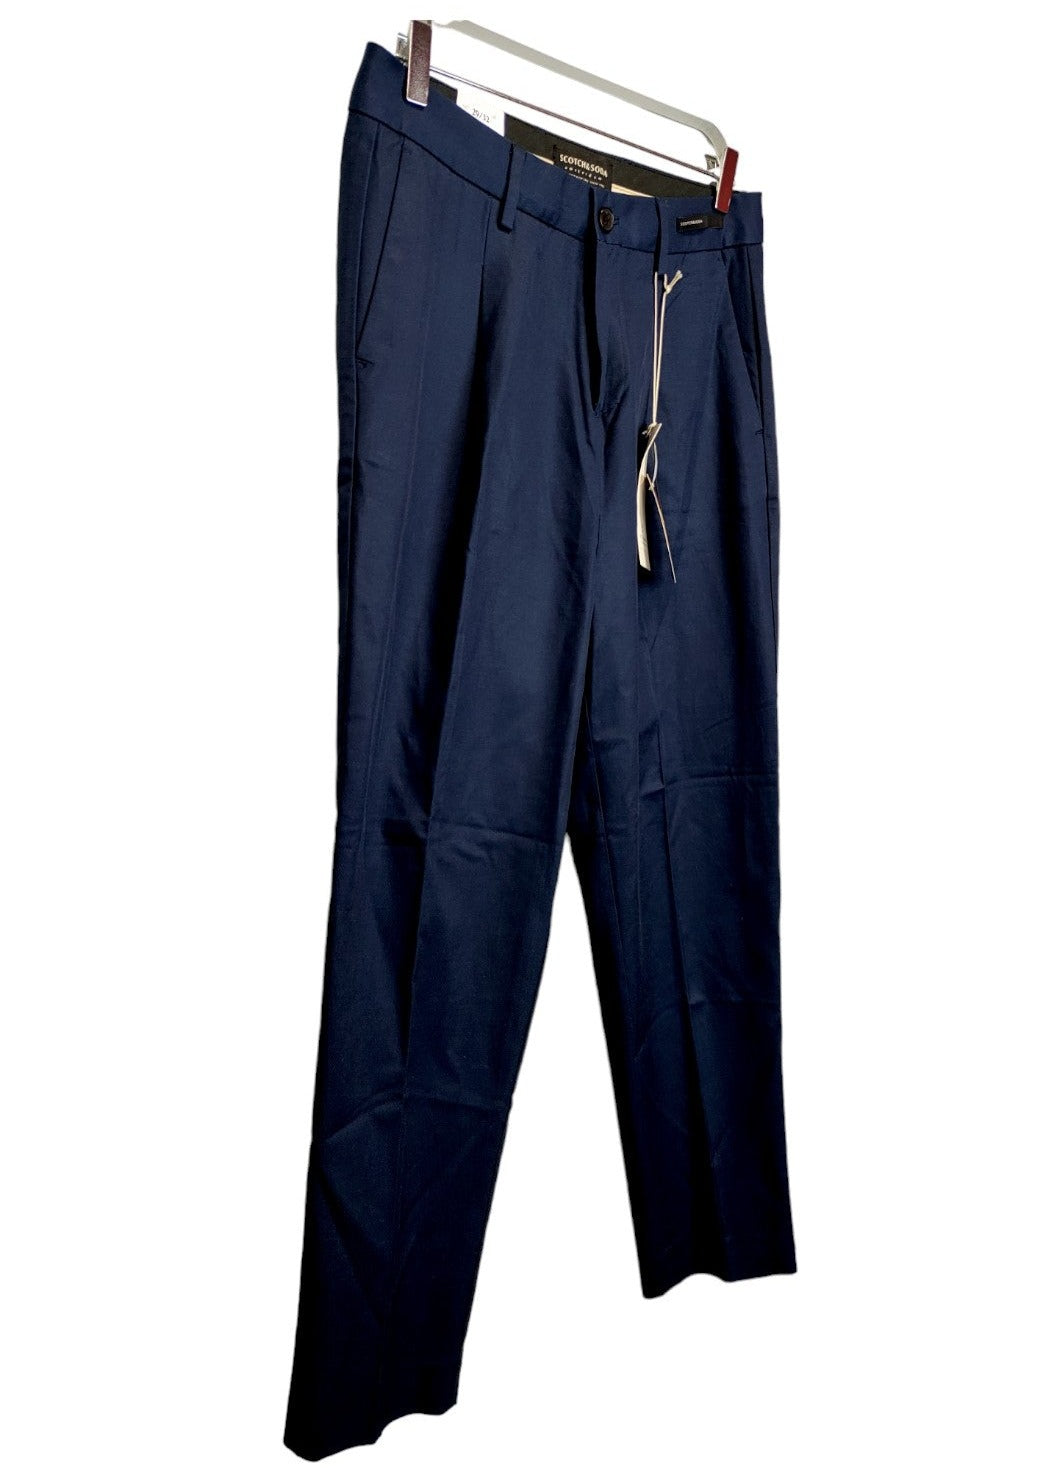 Stock, Ανδρικό Παντελόνι SCOTCH & SODA σε Σκούρο Μπλε Χρώμα (No 31)